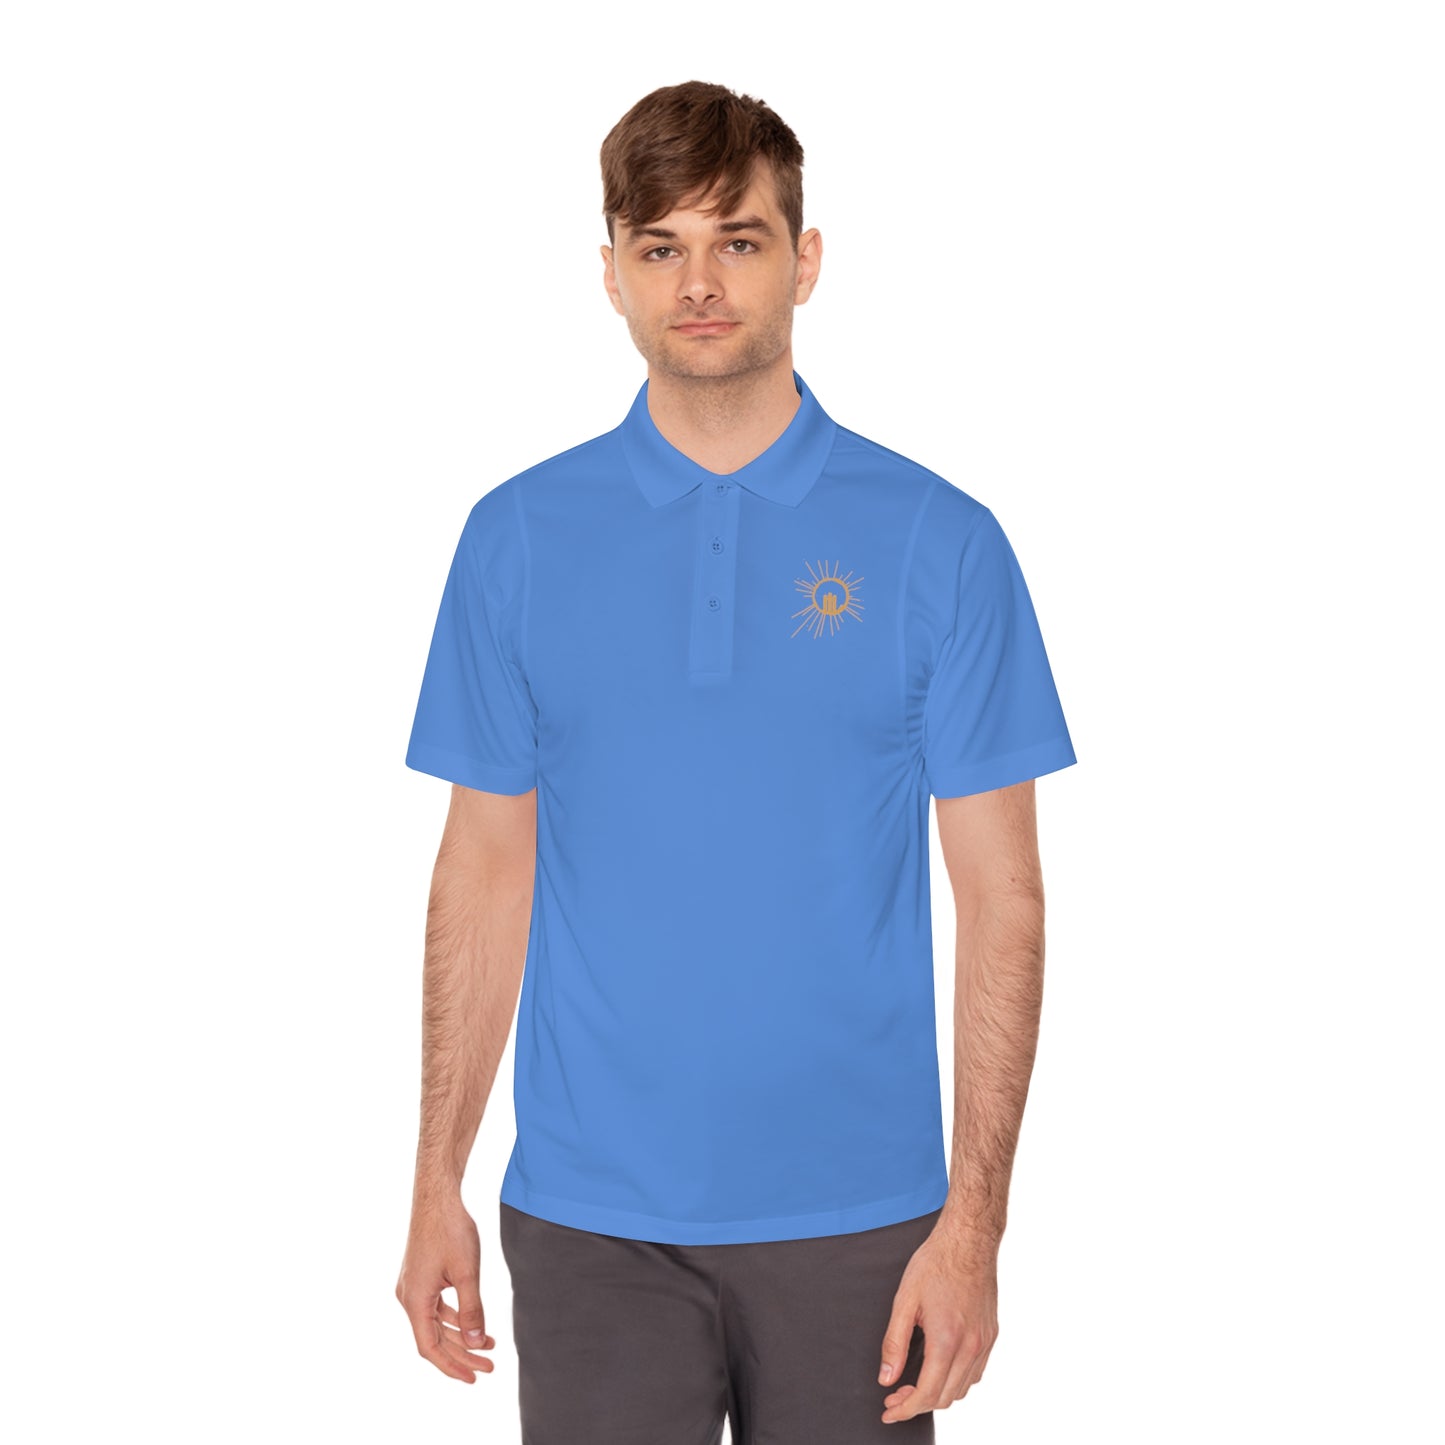 Polo Shirt - A Sunny Day Logo Polo Shirt (White/Black/Blue)